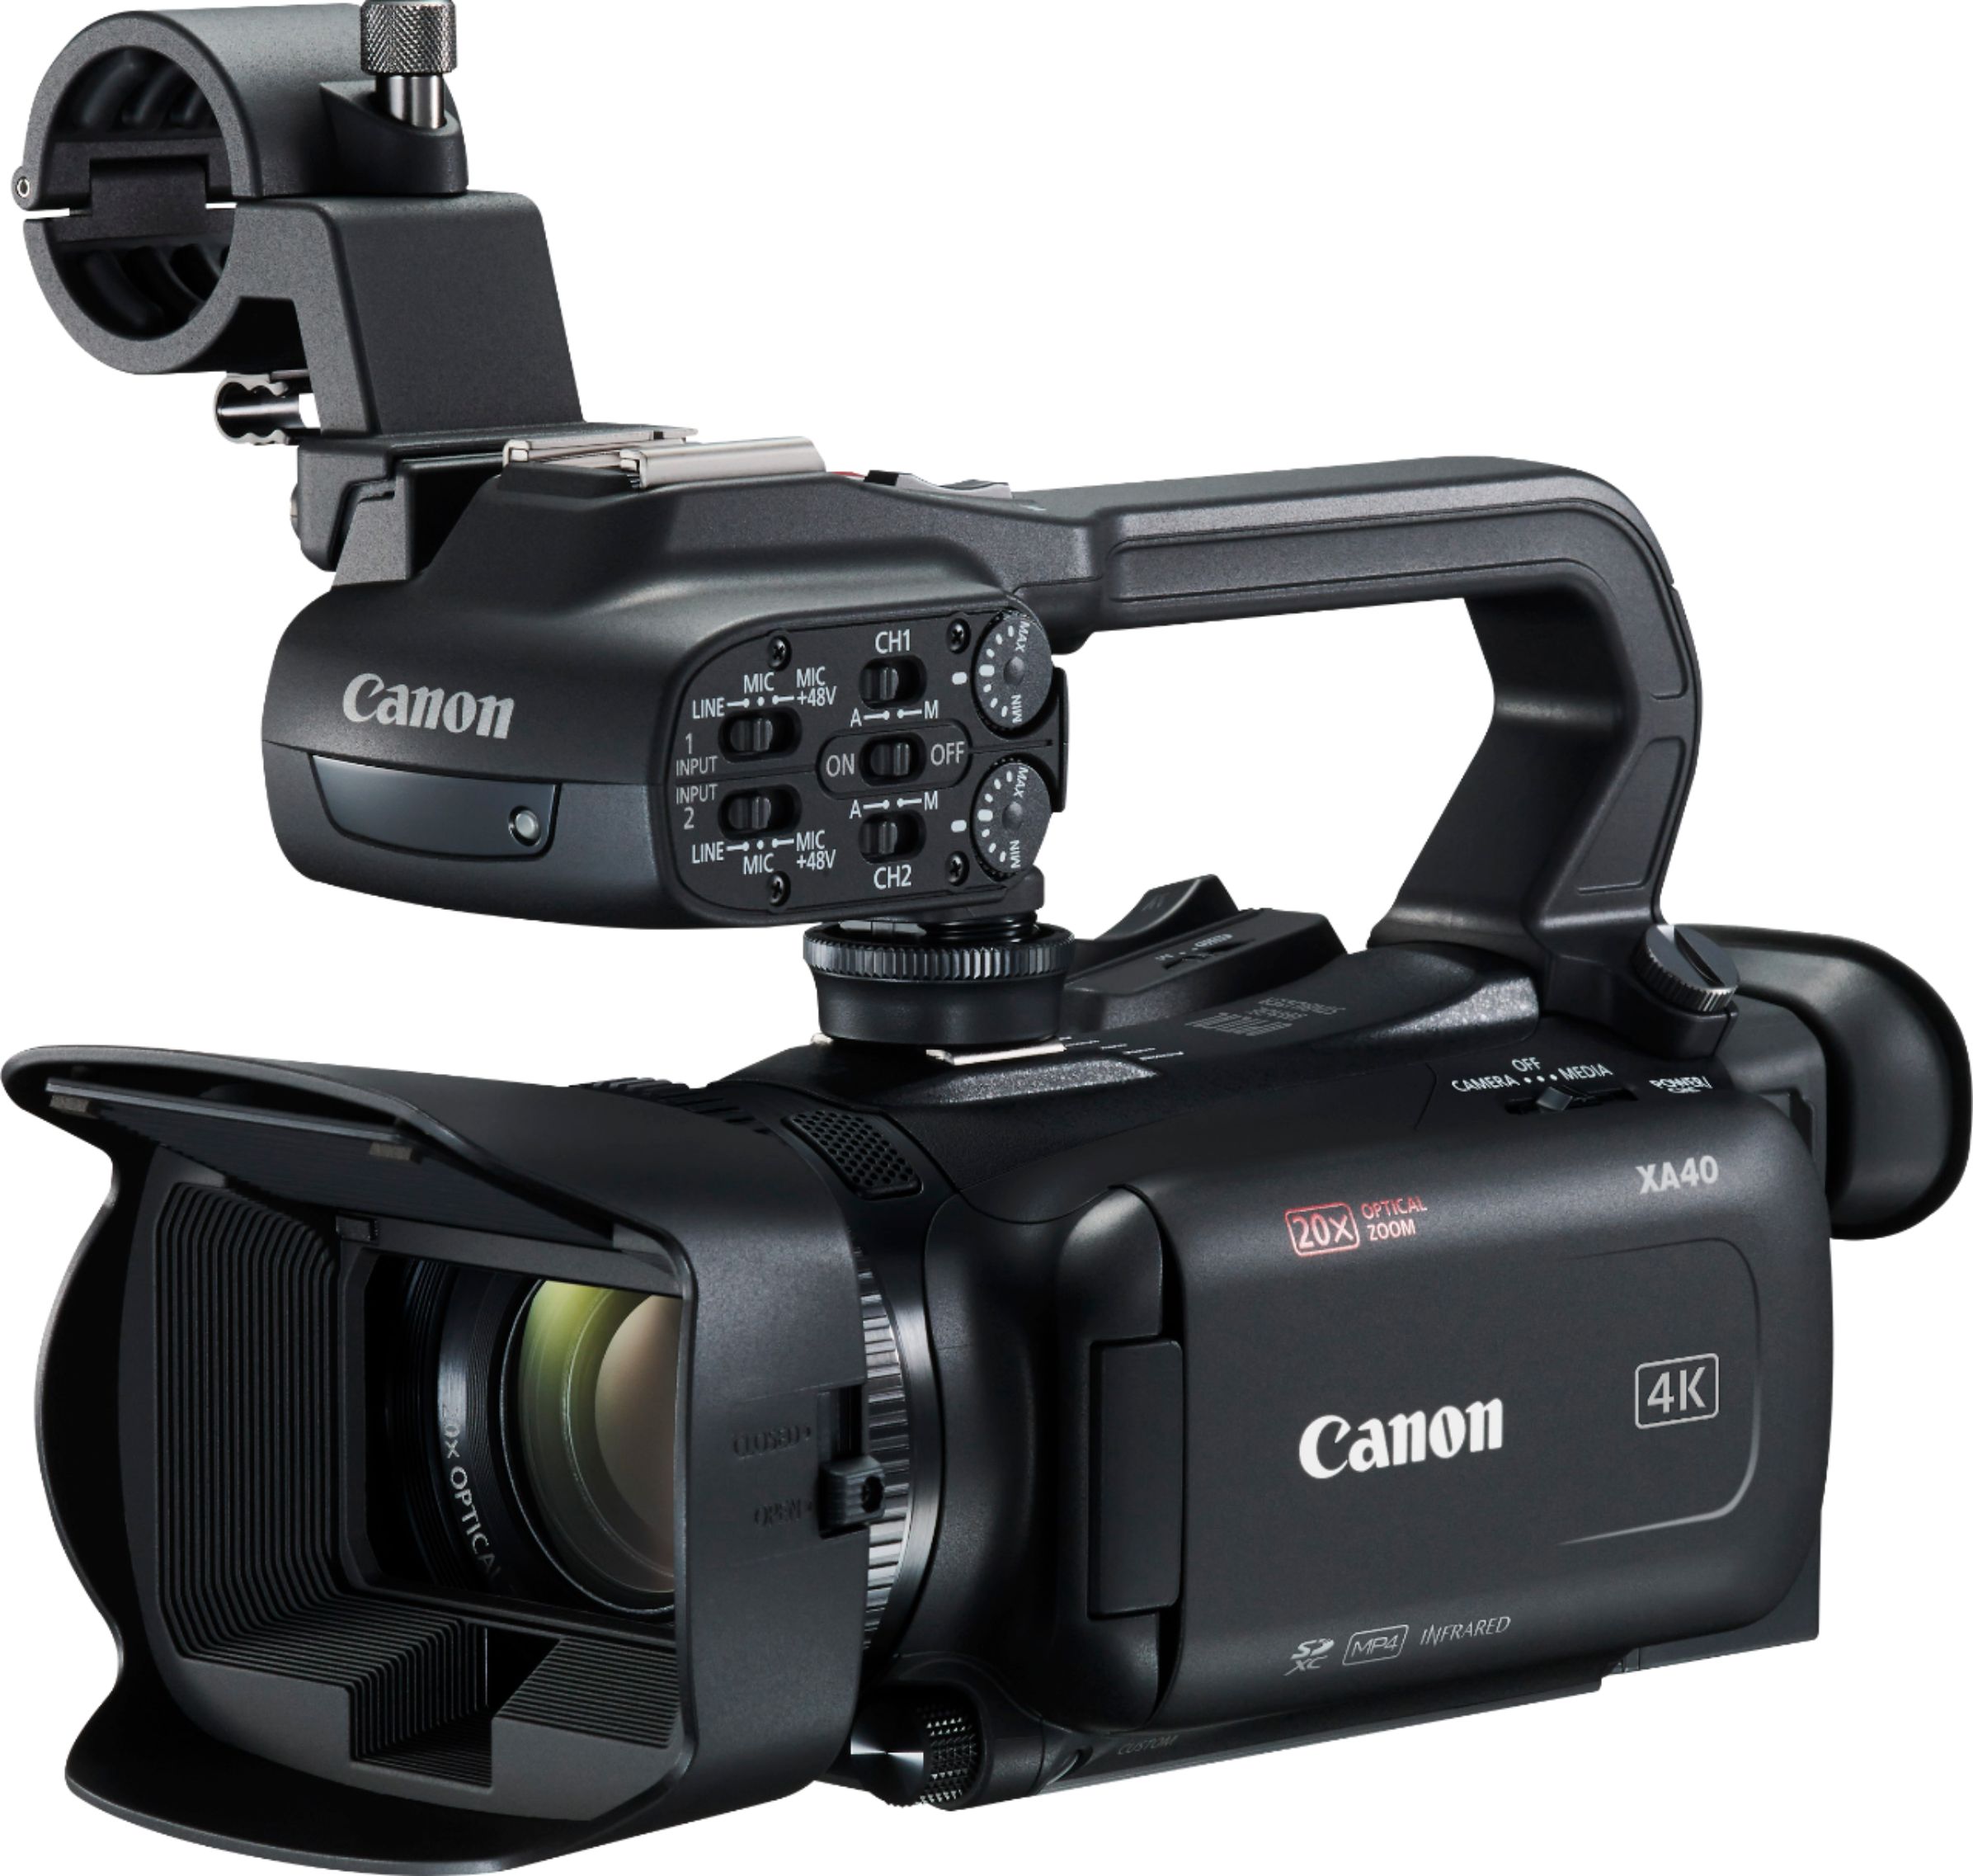 Angle View: Canon - XA40 Flash Memory Camcorder